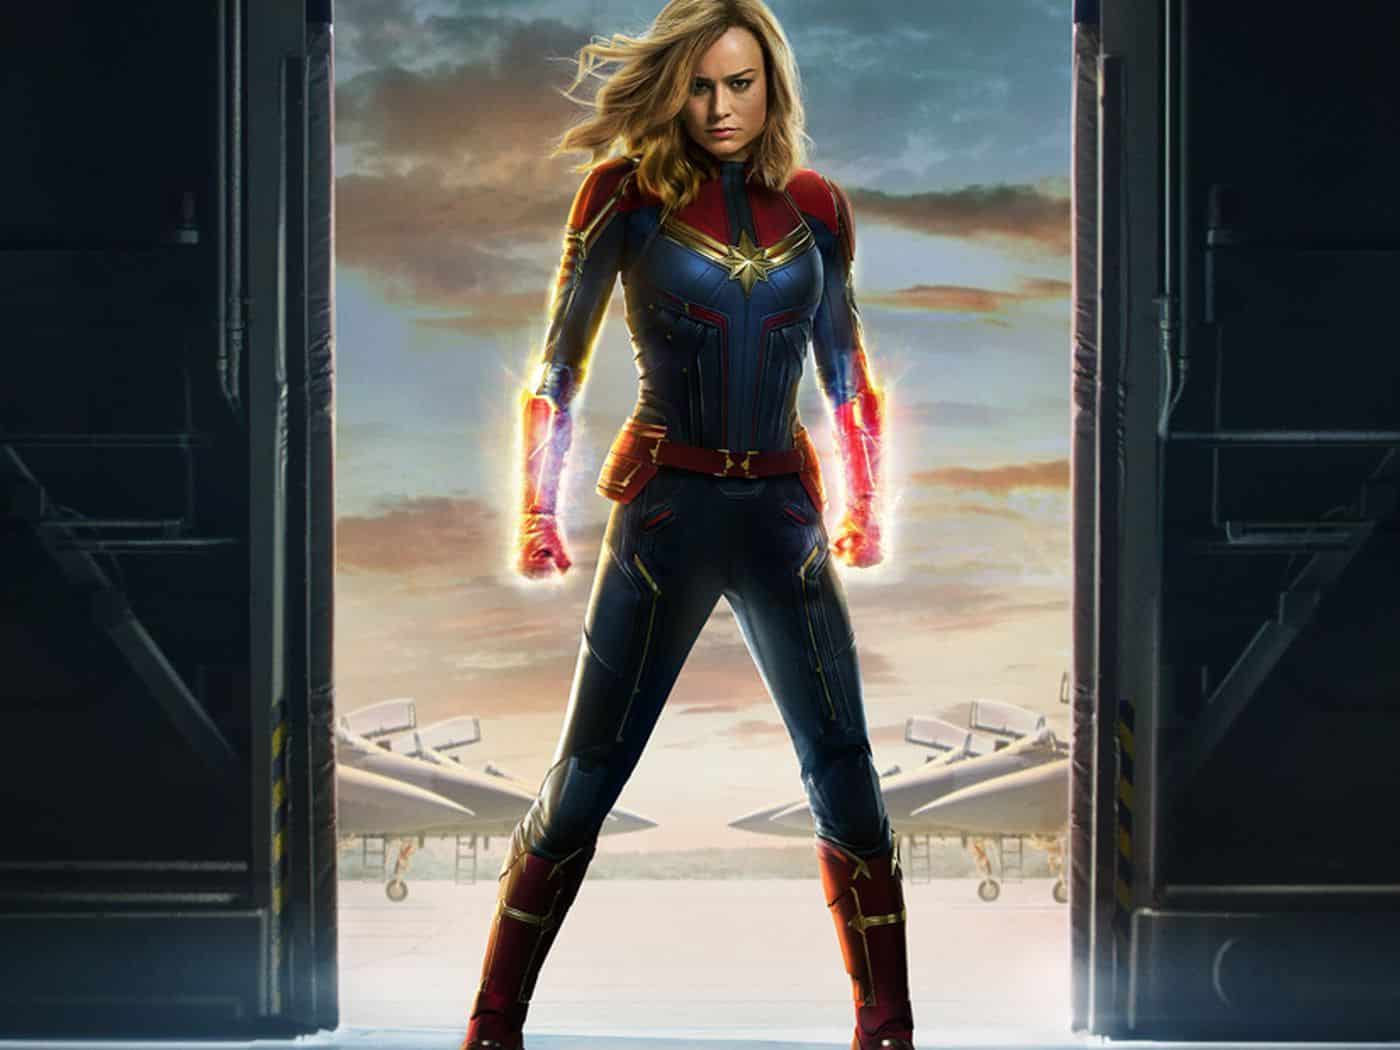 Brie-Larson-As-Captain-Marvel-in-Faza-3-of-the-marve-cinematograf-universe